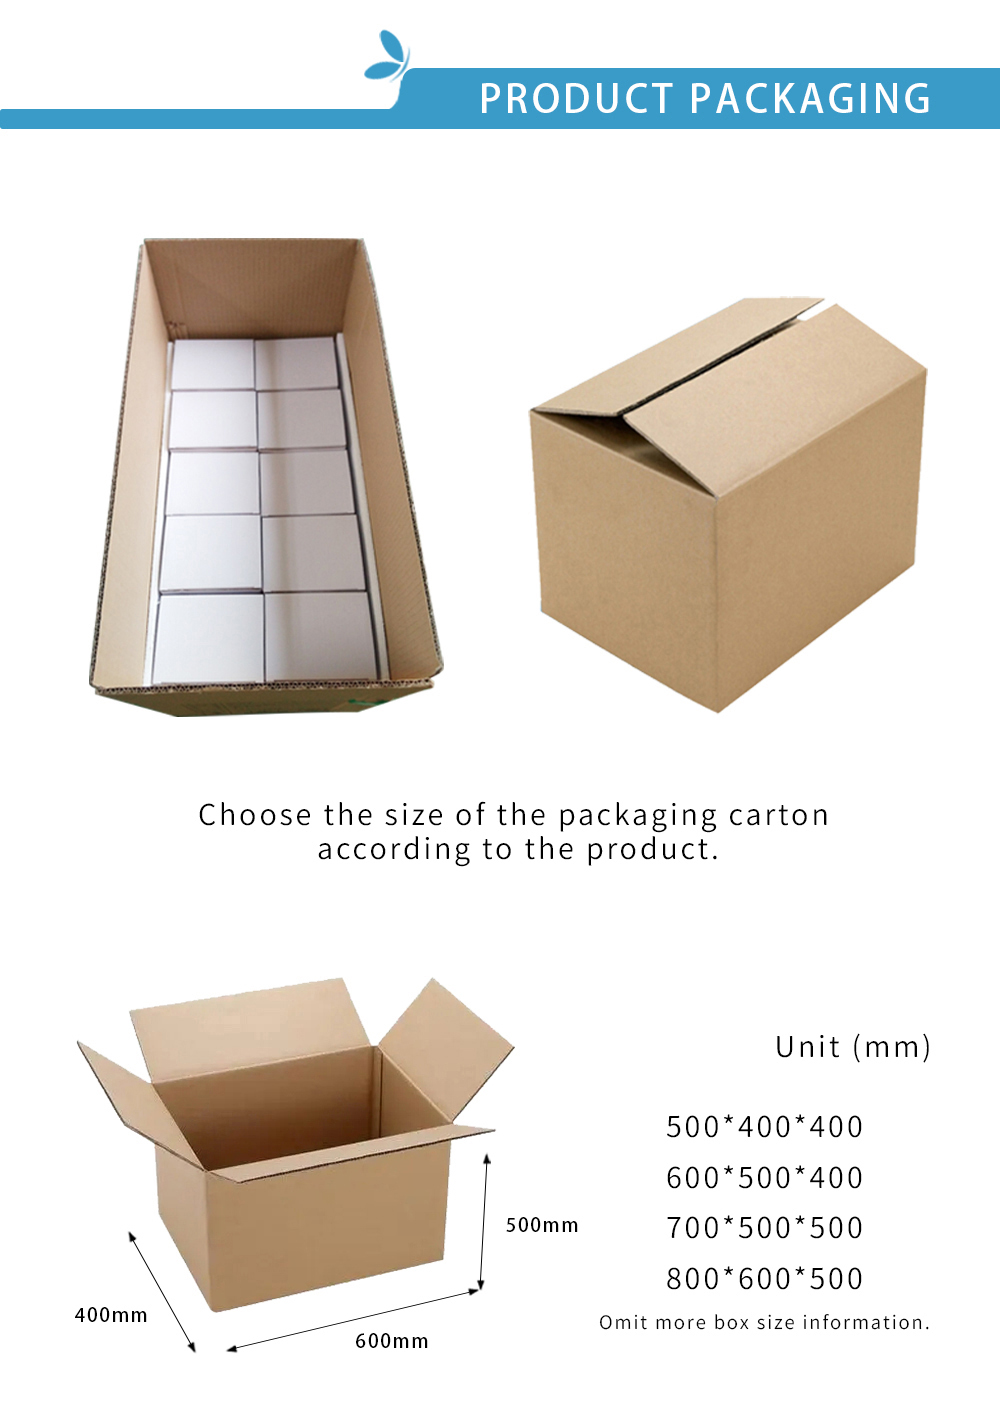 3. Liquid lipstick packaging box